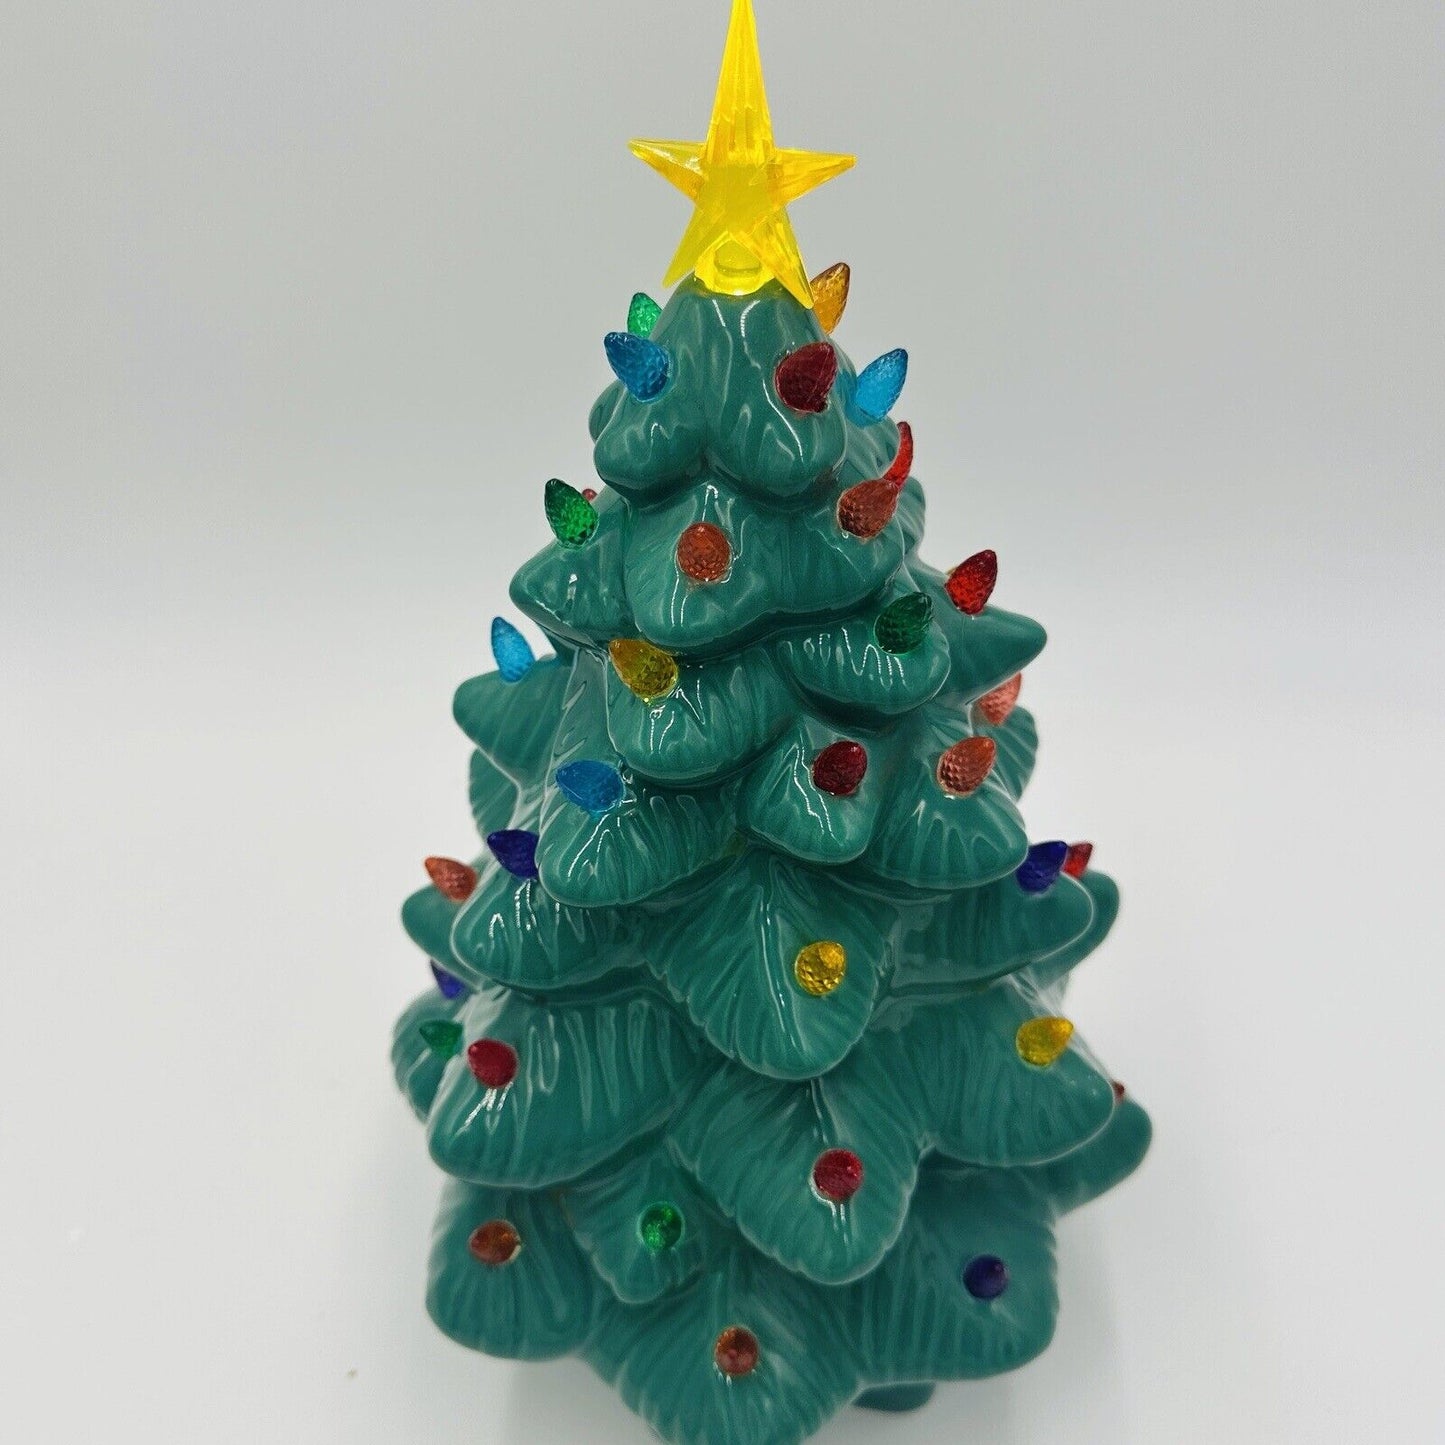 Mr Christmas Ceramic Tree 14” Lights Up Battery Operated Nostalgic Green